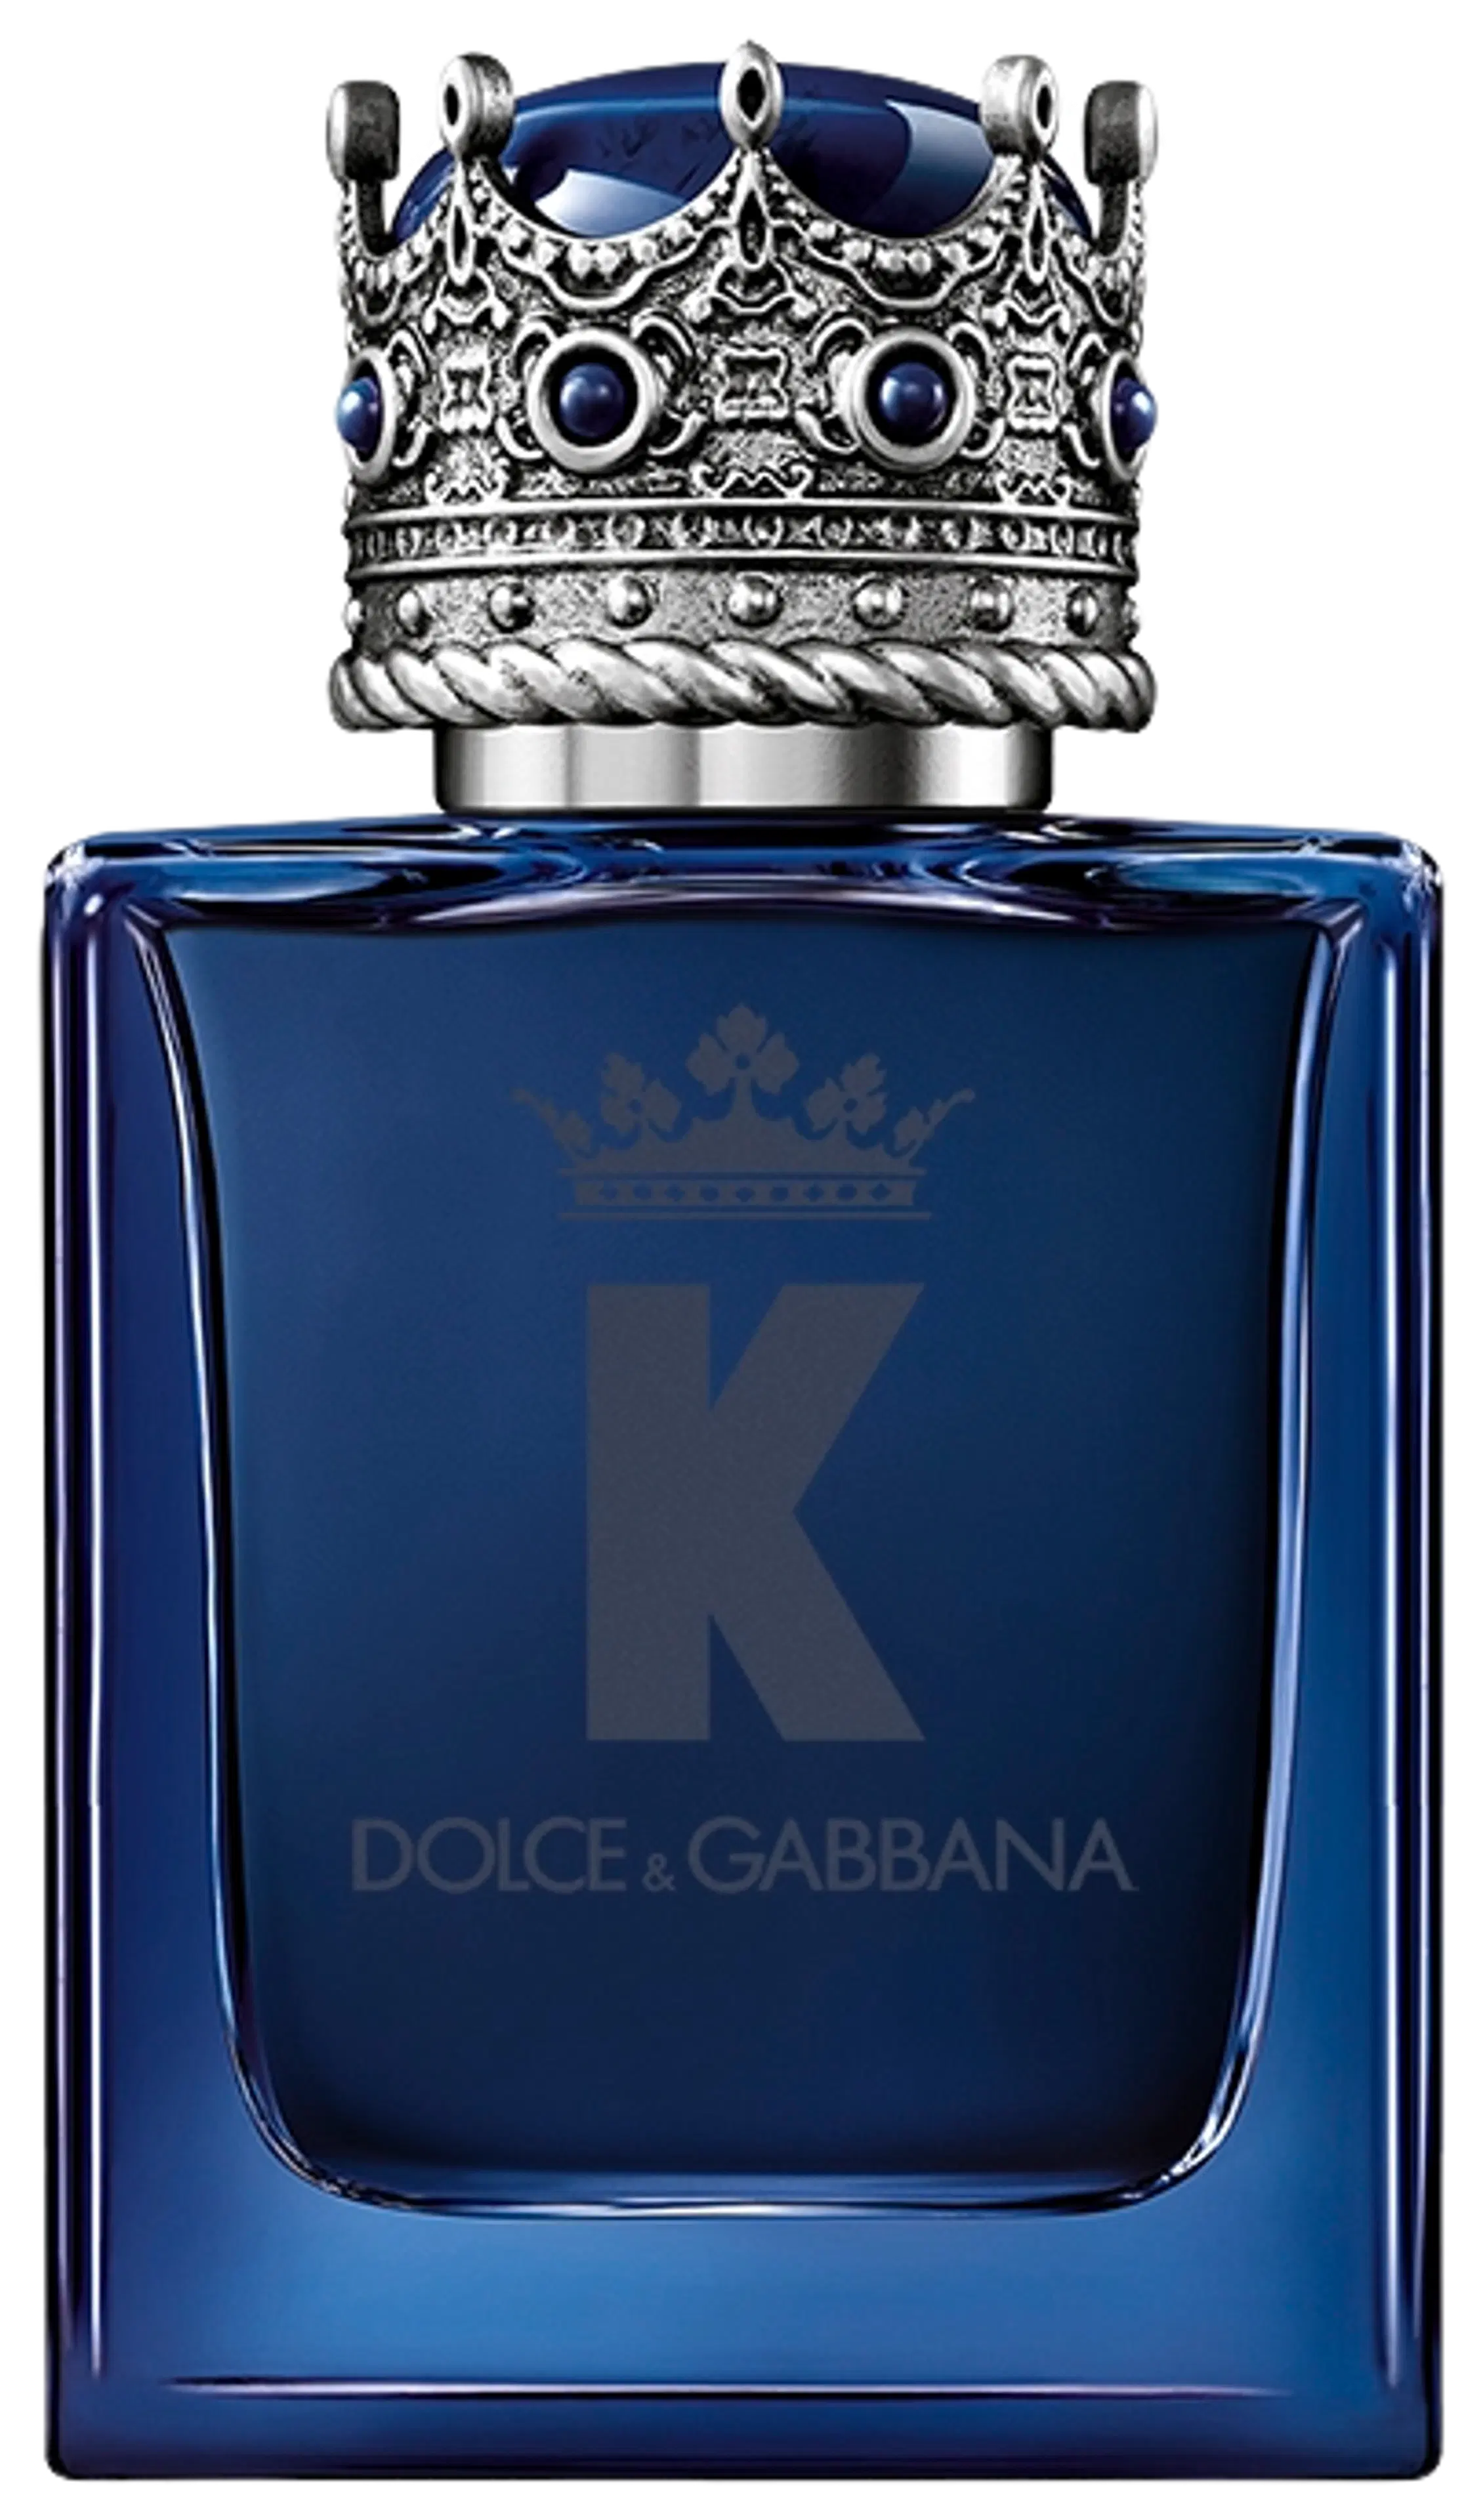 Dolce&Gabbana K by DG EdP Intense tuoksu 50 ml